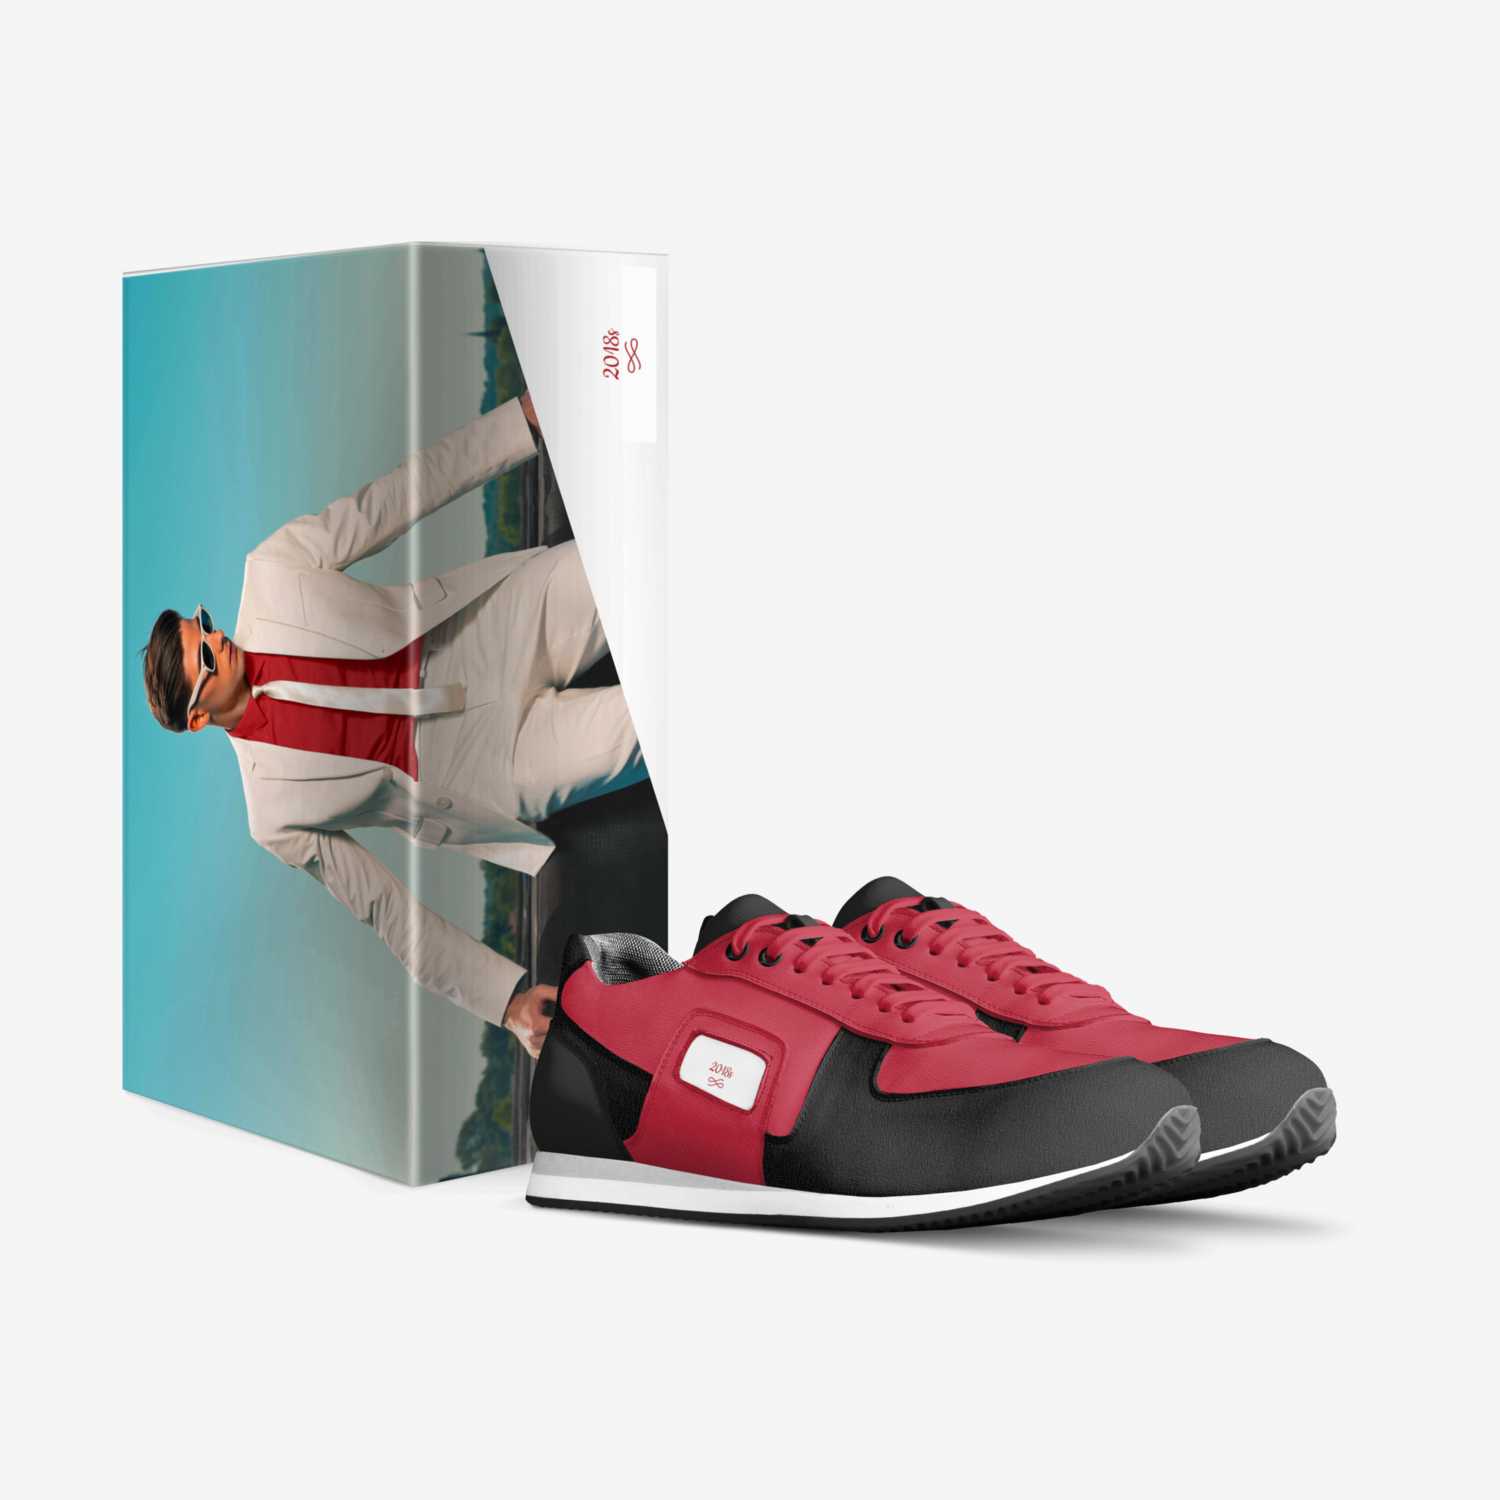 2018s | A Custom Shoe concept by Mario Lopez